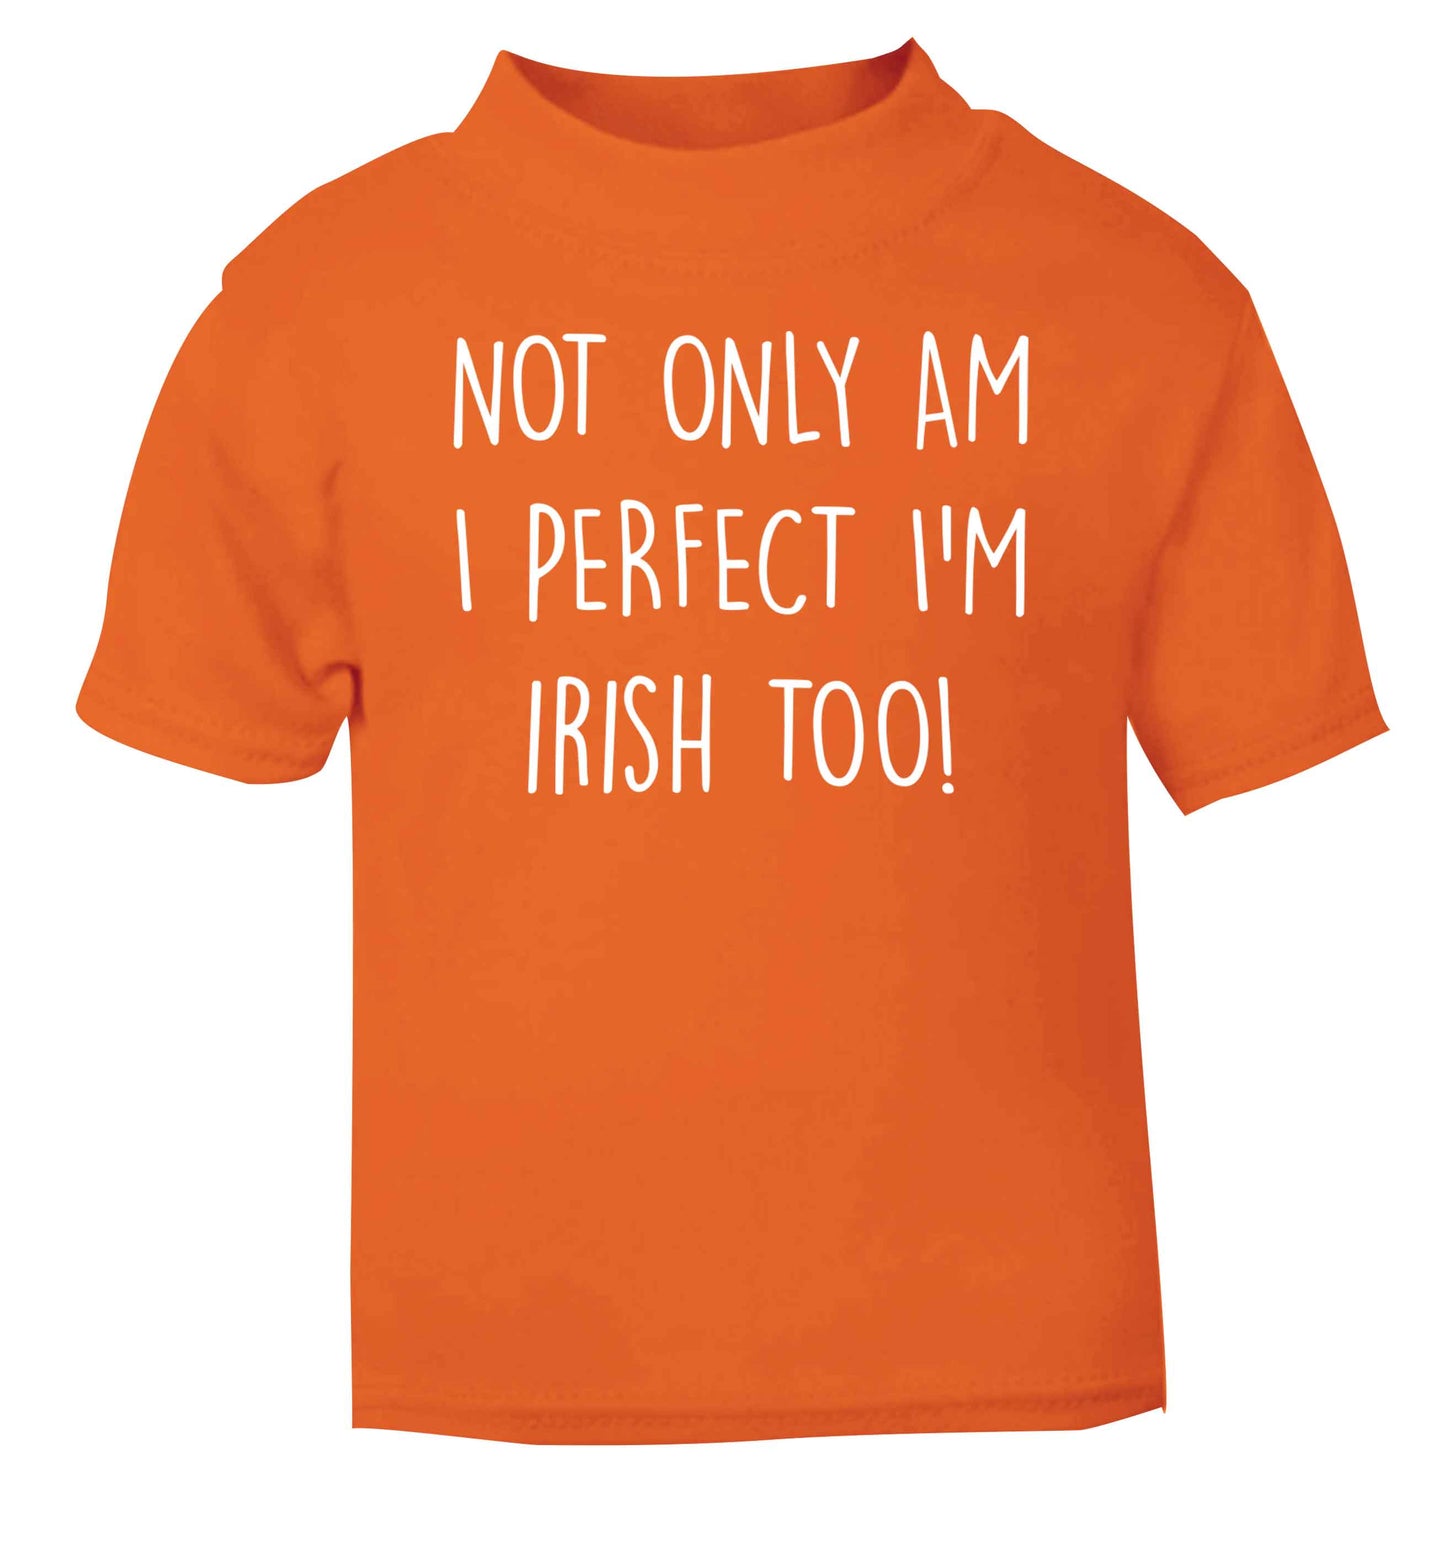 Not only am I perfect I'm Irish too! orange baby toddler Tshirt 2 Years